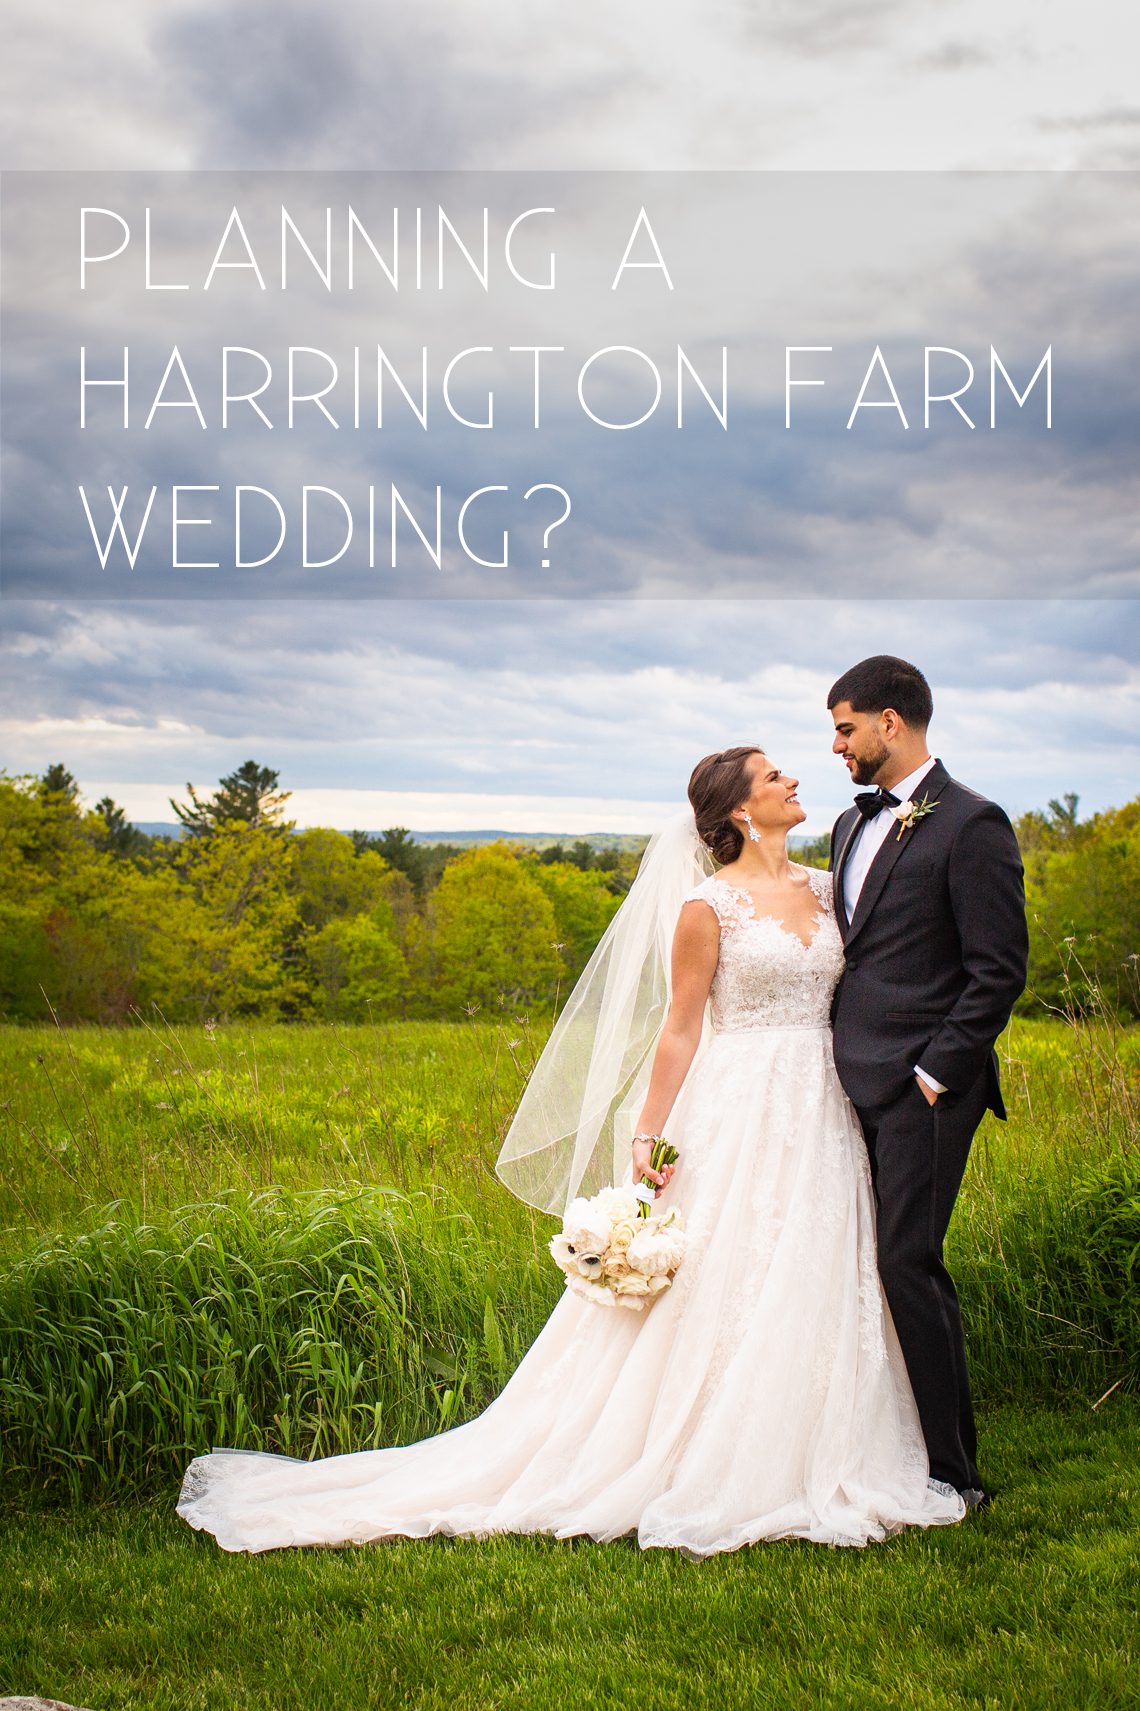 harrington-farm-wedding-venue-photos-central-mass